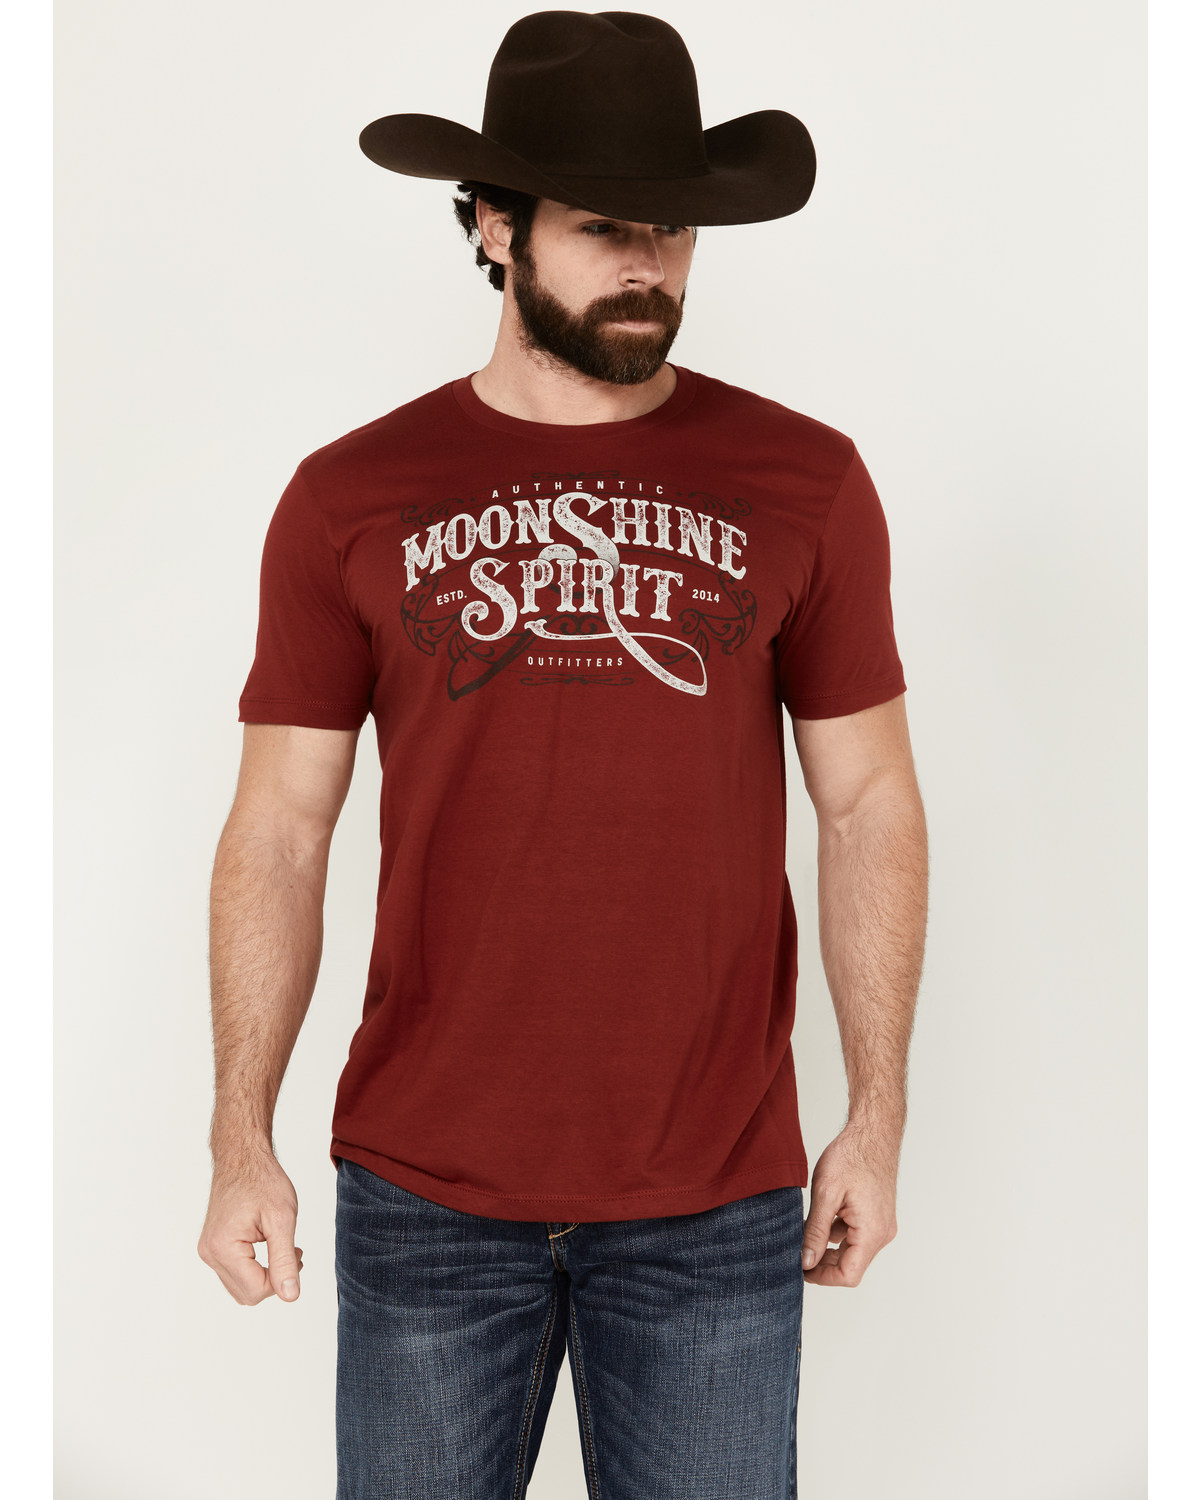 Moonshine Spirit Men's Authentic Short Sleeve Graphic T-Shirt